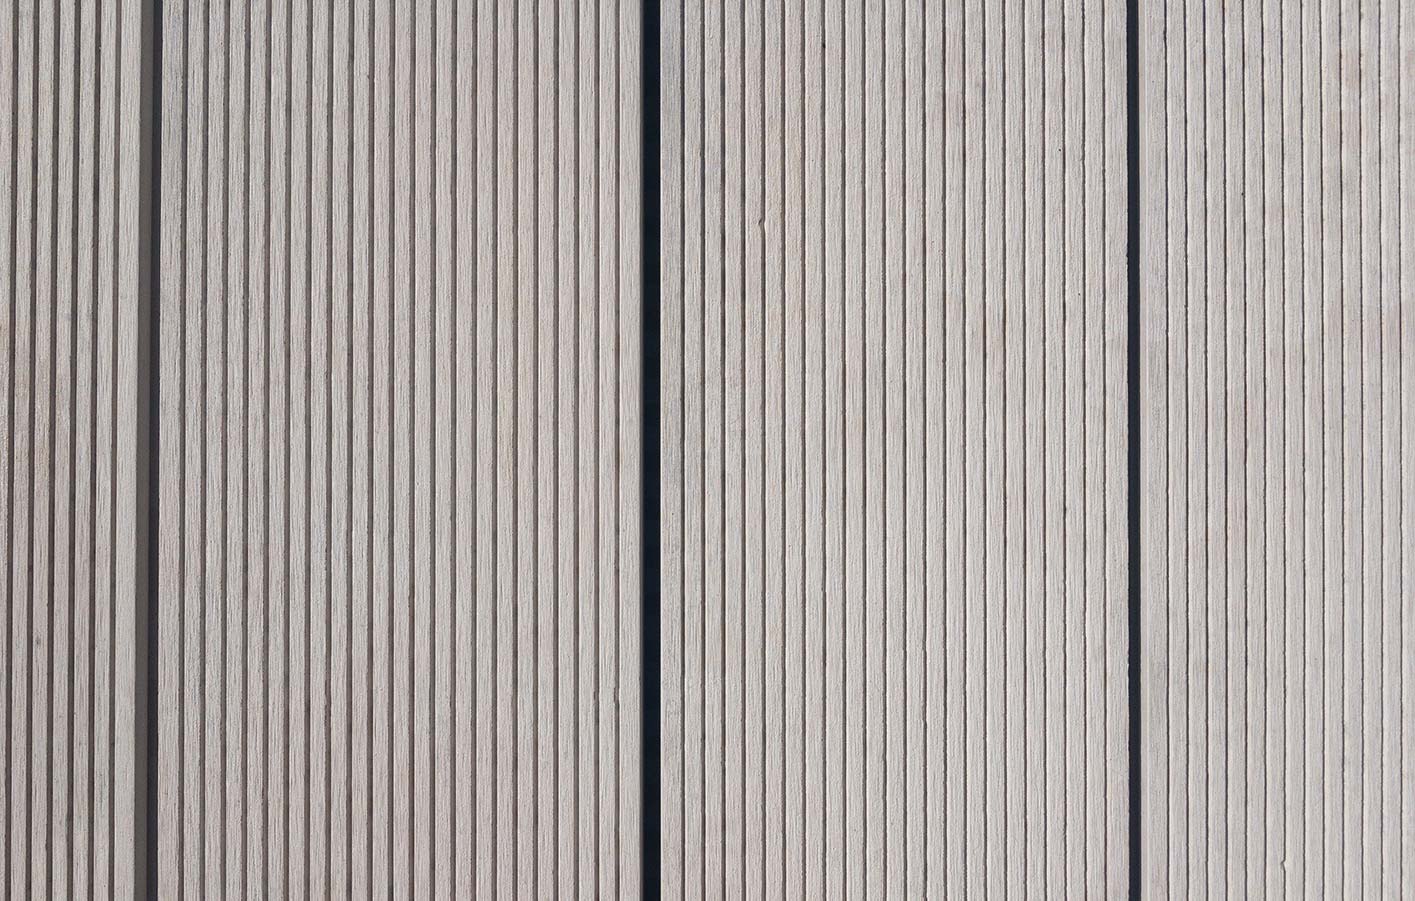 Anblick einer Terrasse aus Wood Plastic Composite - kurz WPC.